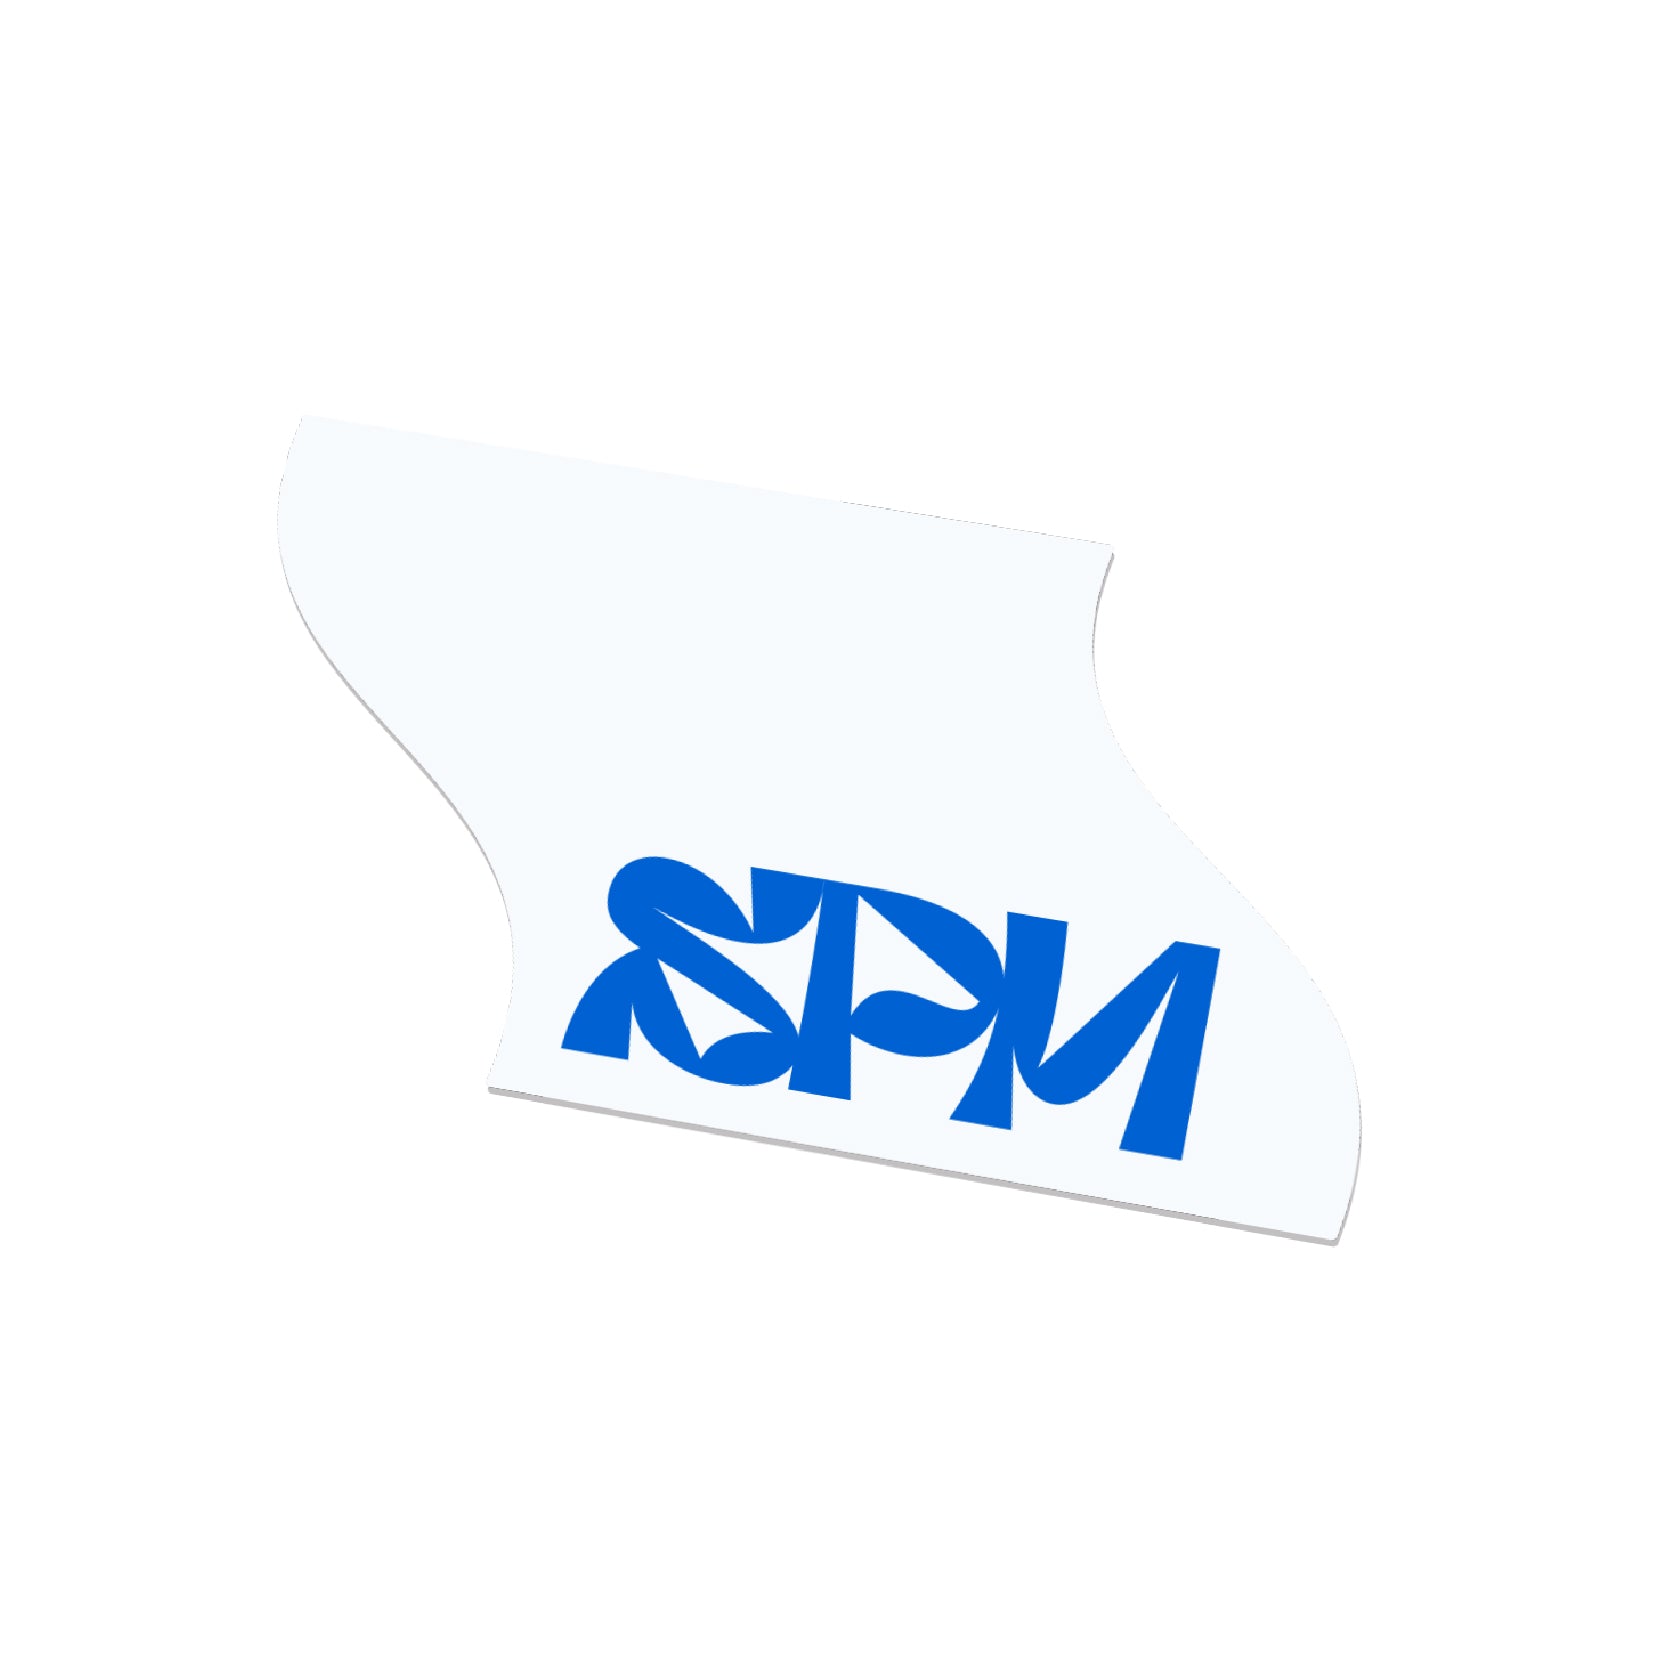 SPM stickers